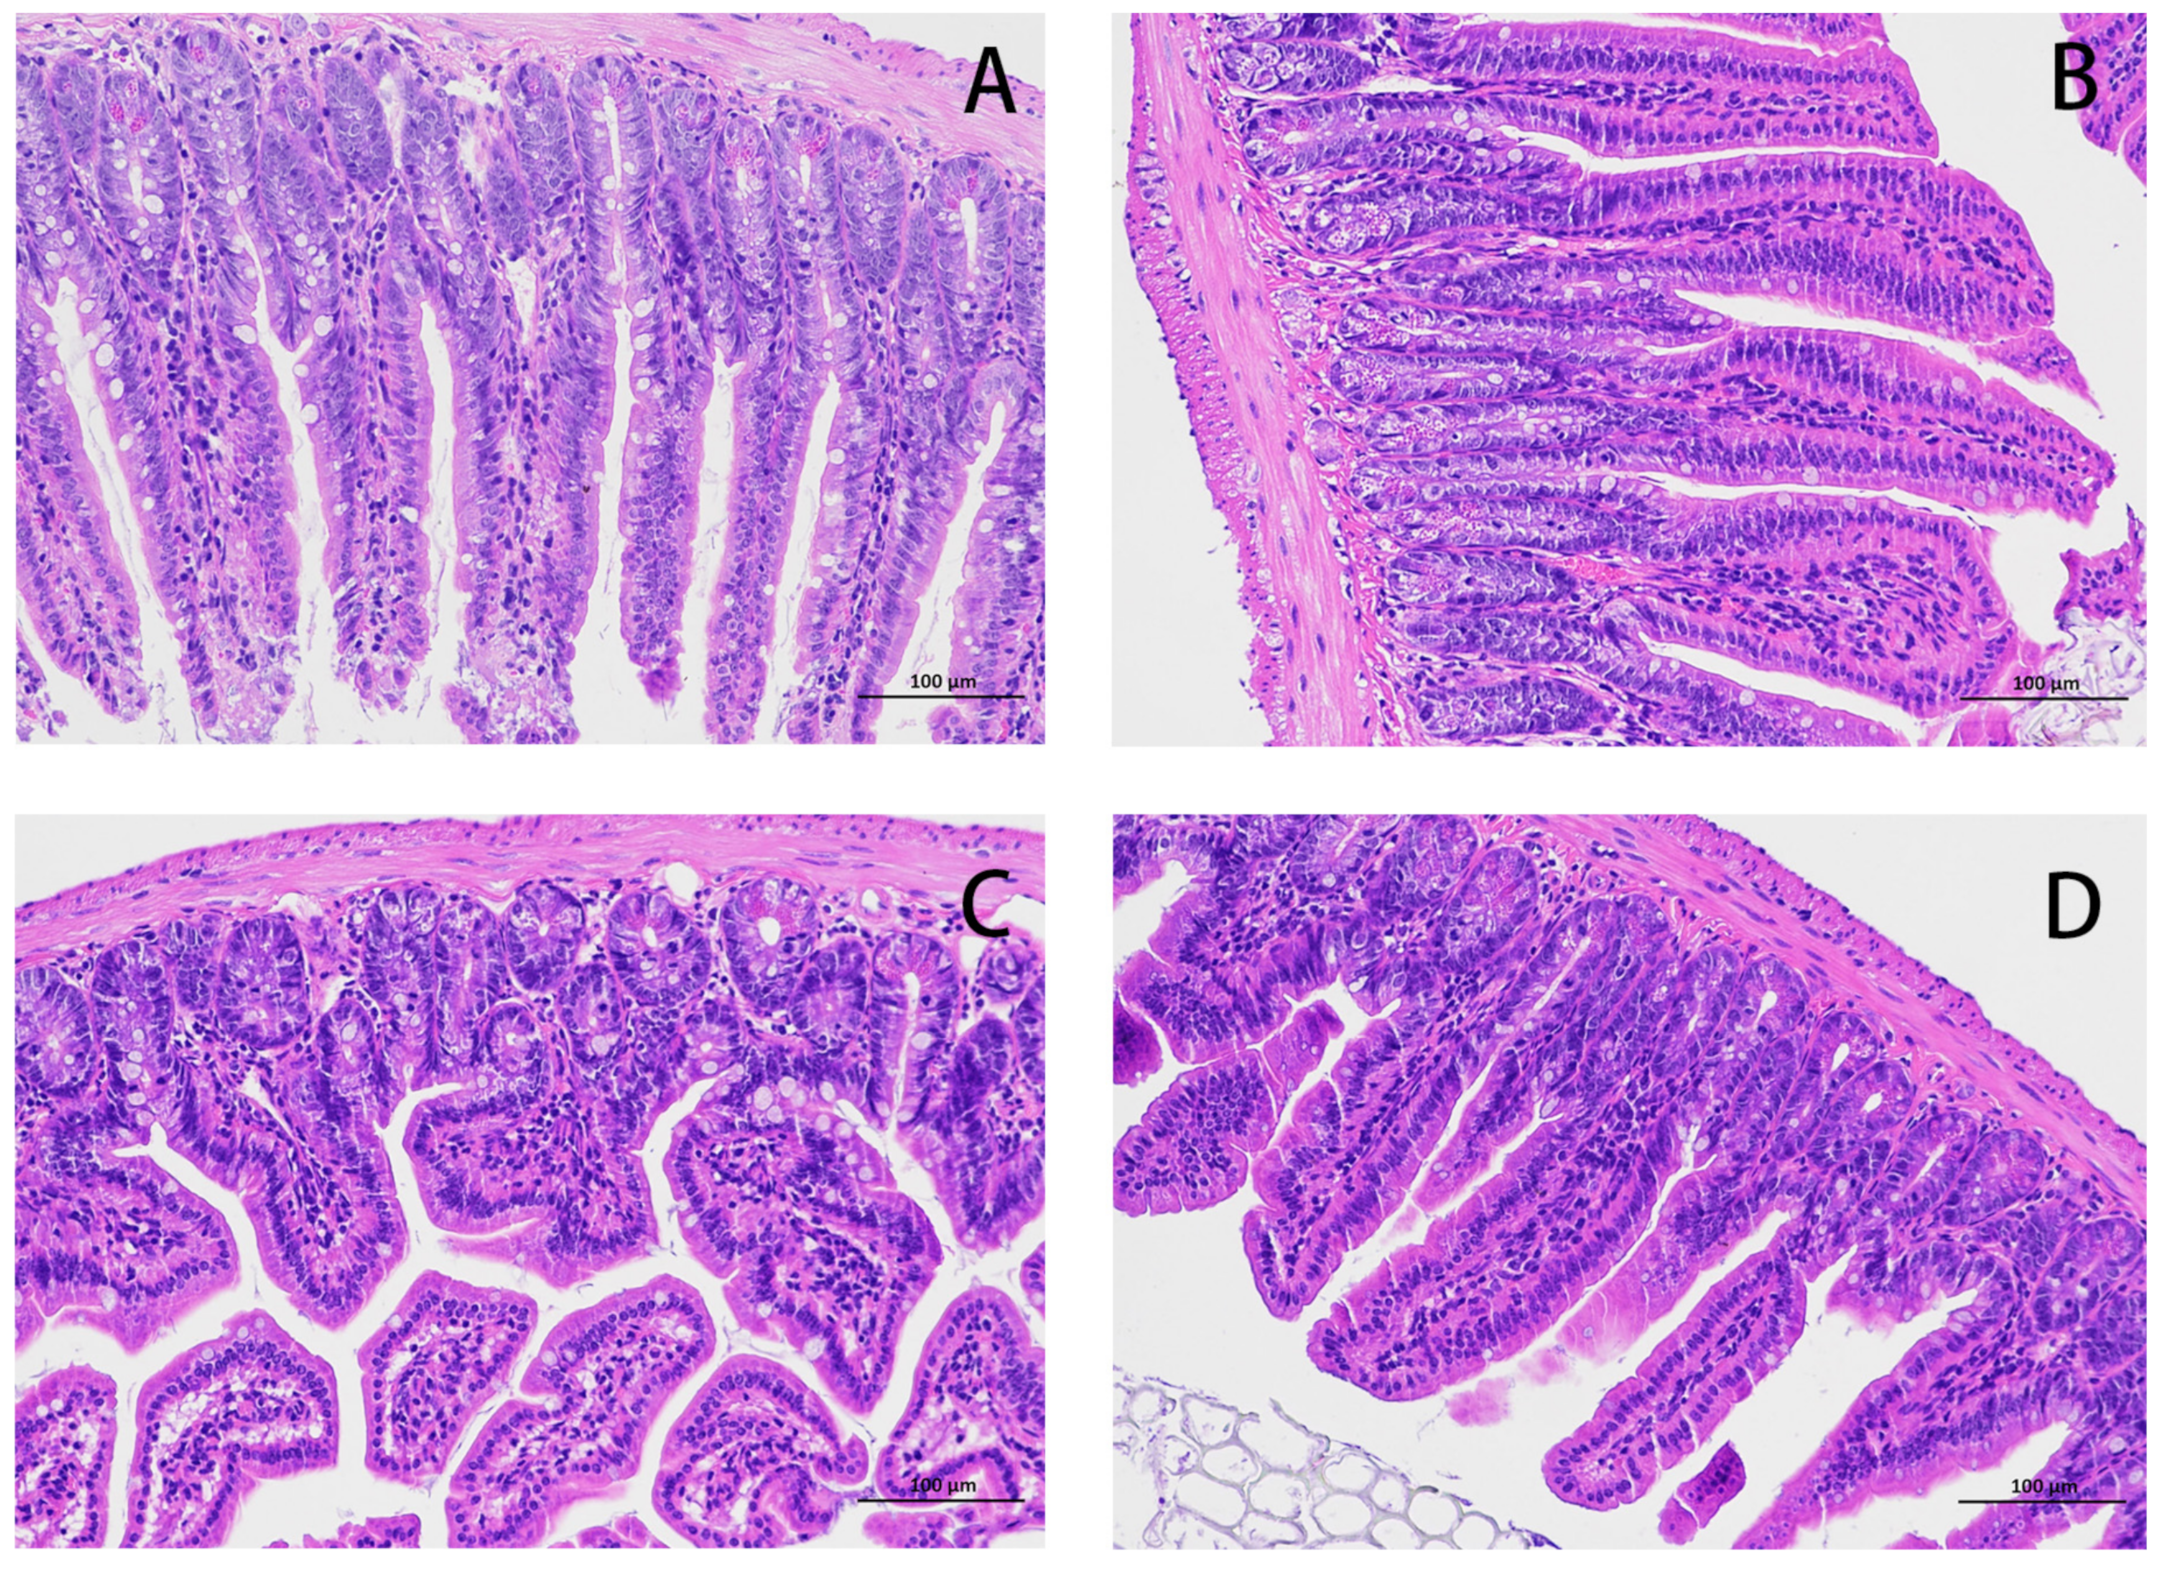 Light microscopy of Lactobacillus rhamnosus E/N (a, b) and PEN (c, d).